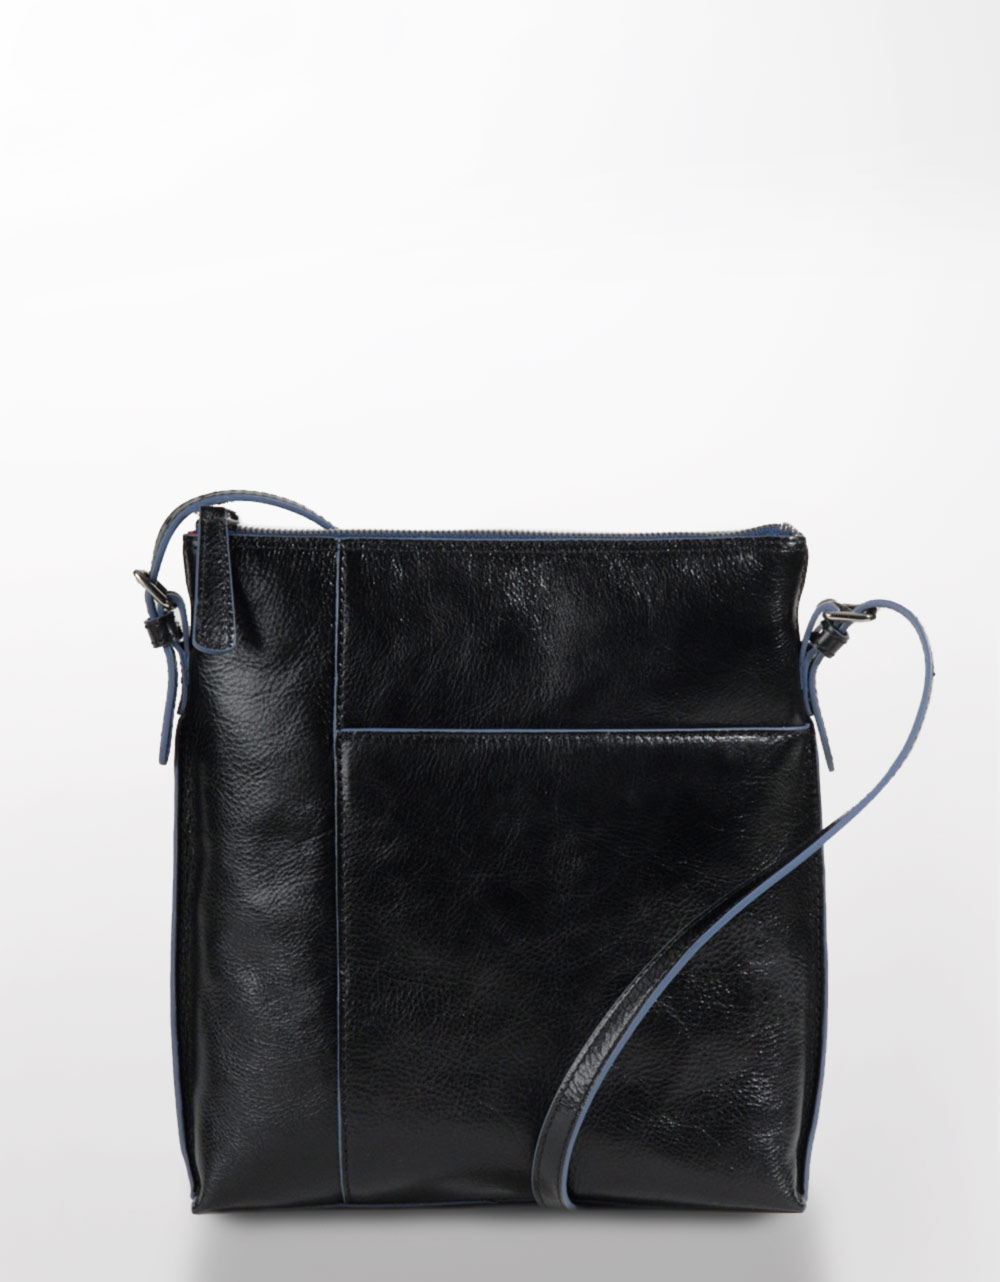 Hobo International Alessa Leather Cross-Body Bag in Black | Lyst